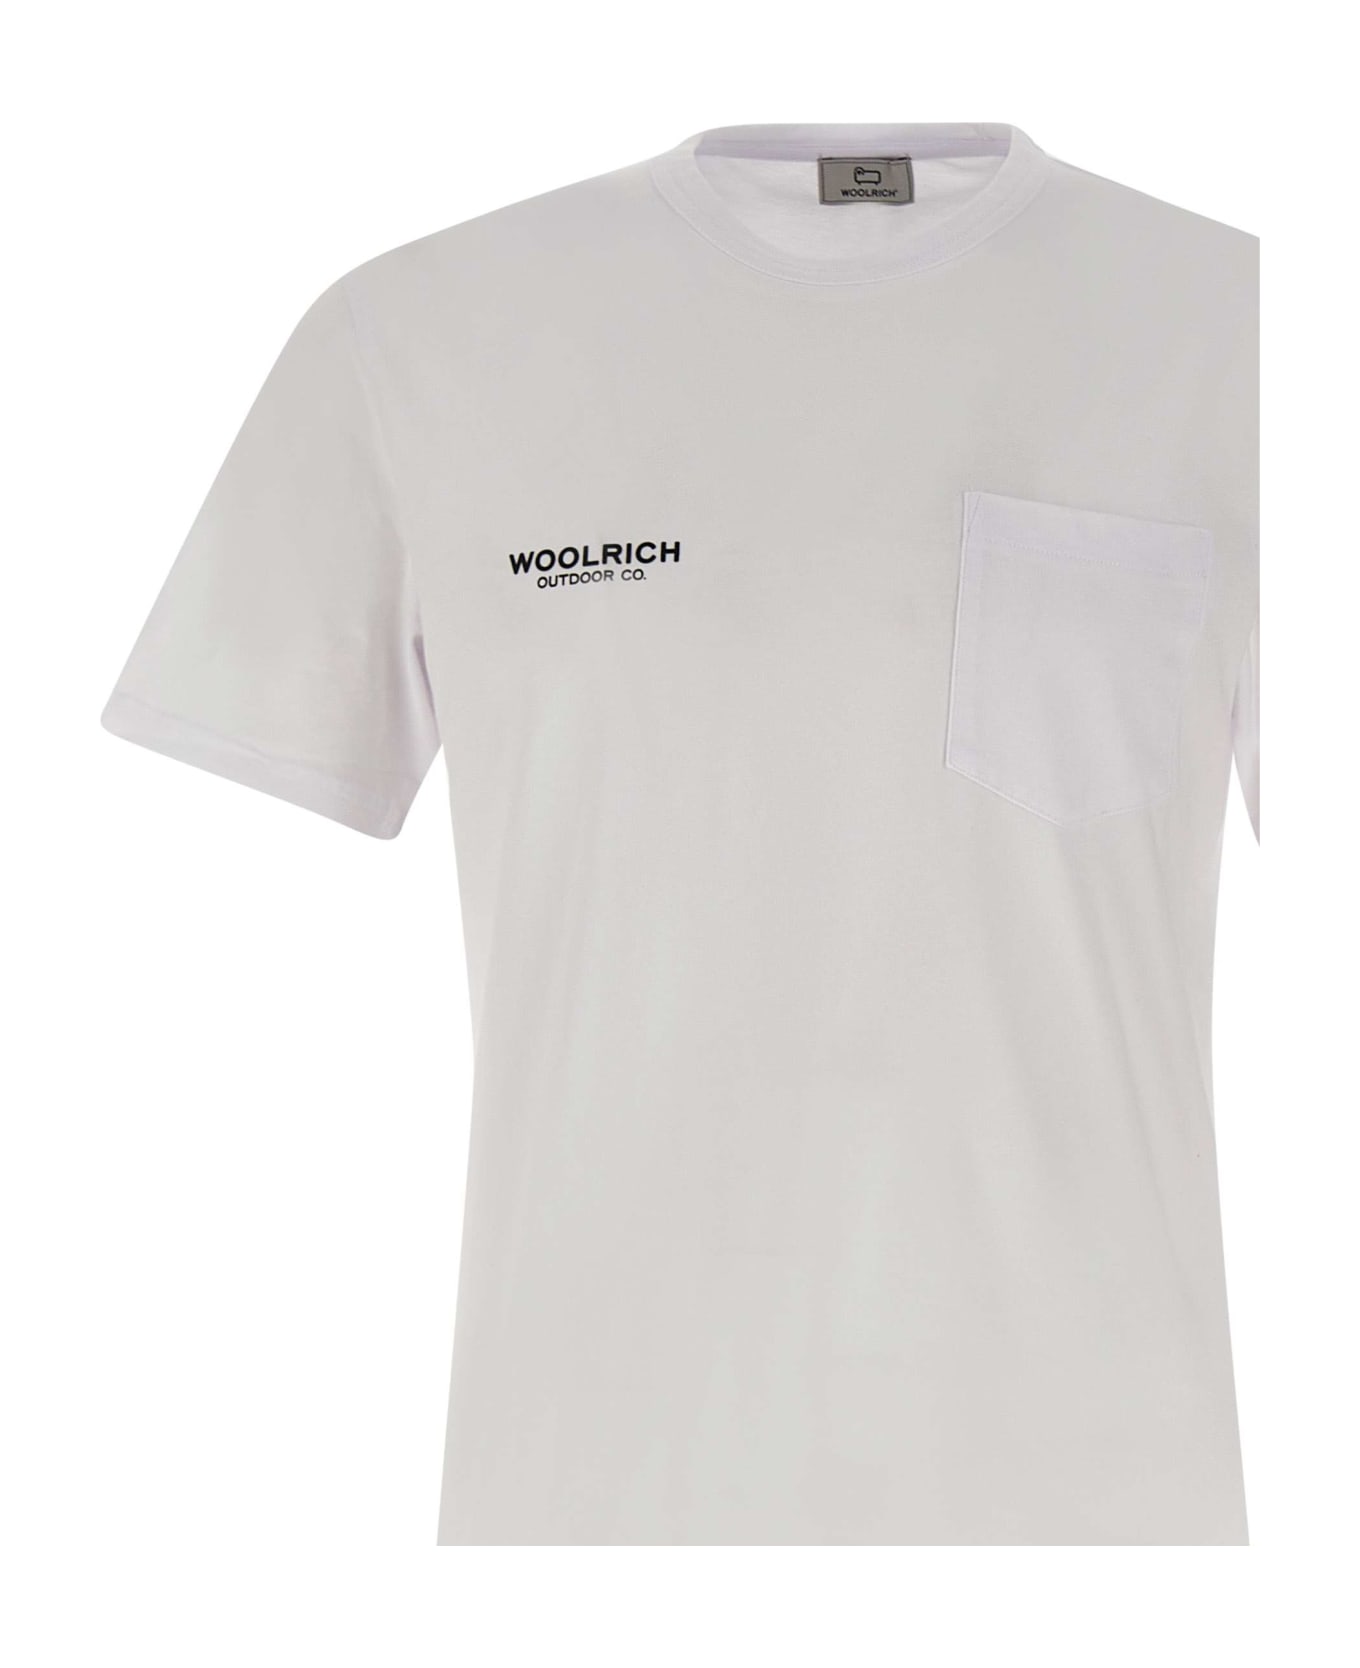 Woolrich "safari" Cotton T-shirt - WHITE